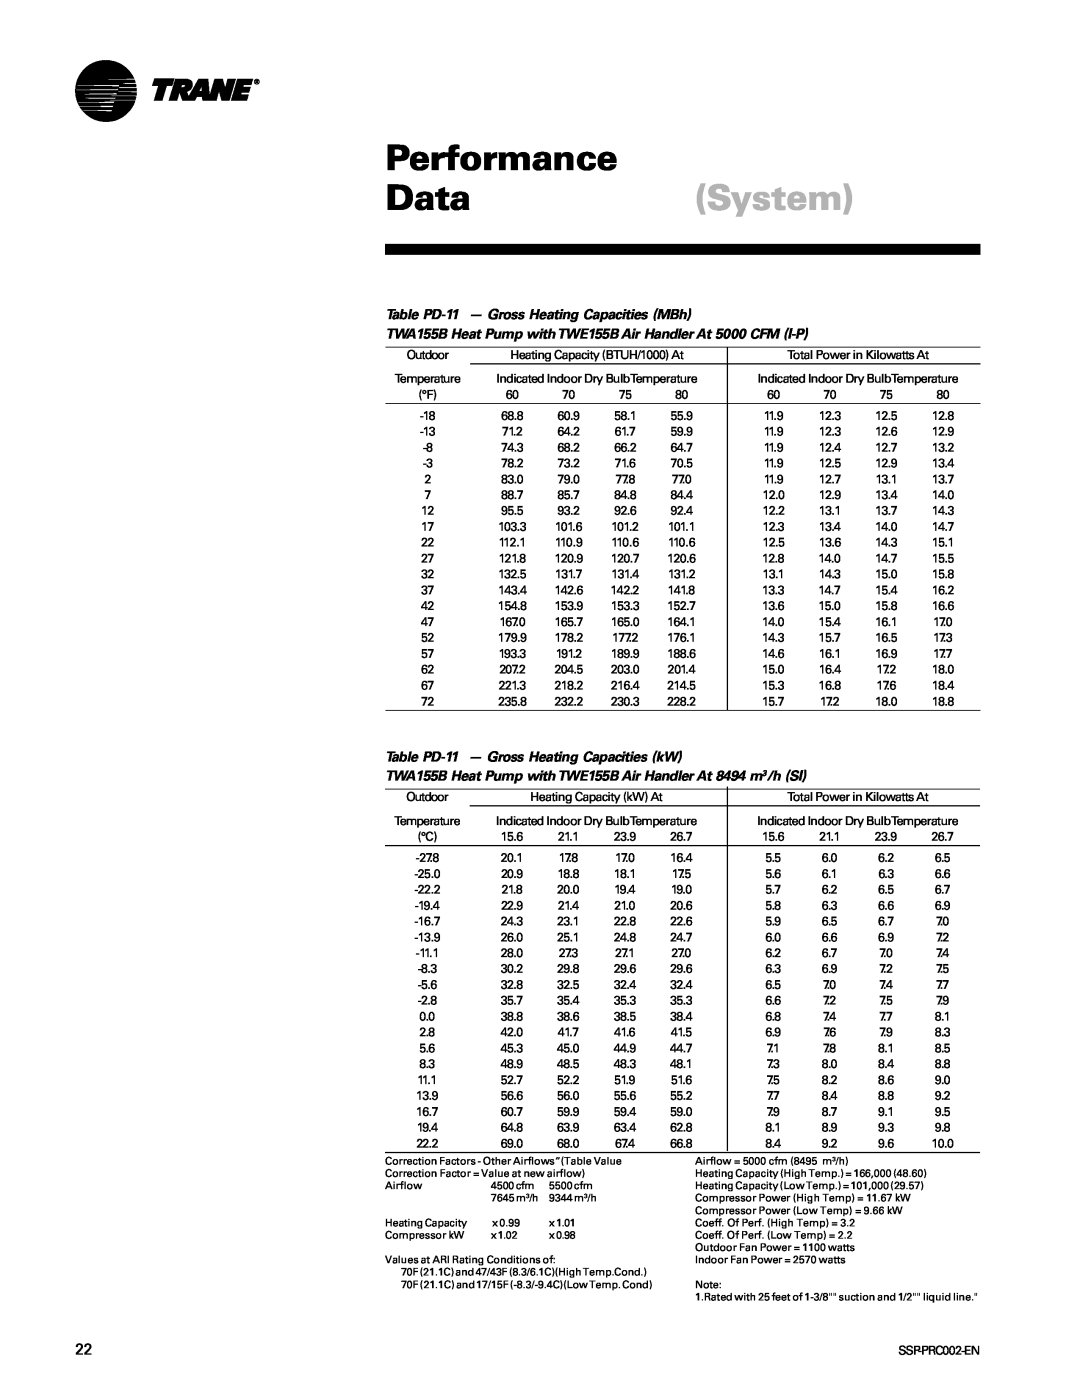 Trane TWA200B Performance, DataSystem, Table PD-11- Gross Heating Capacities MBh, Table PD-11- Gross Heating Capacities kW 